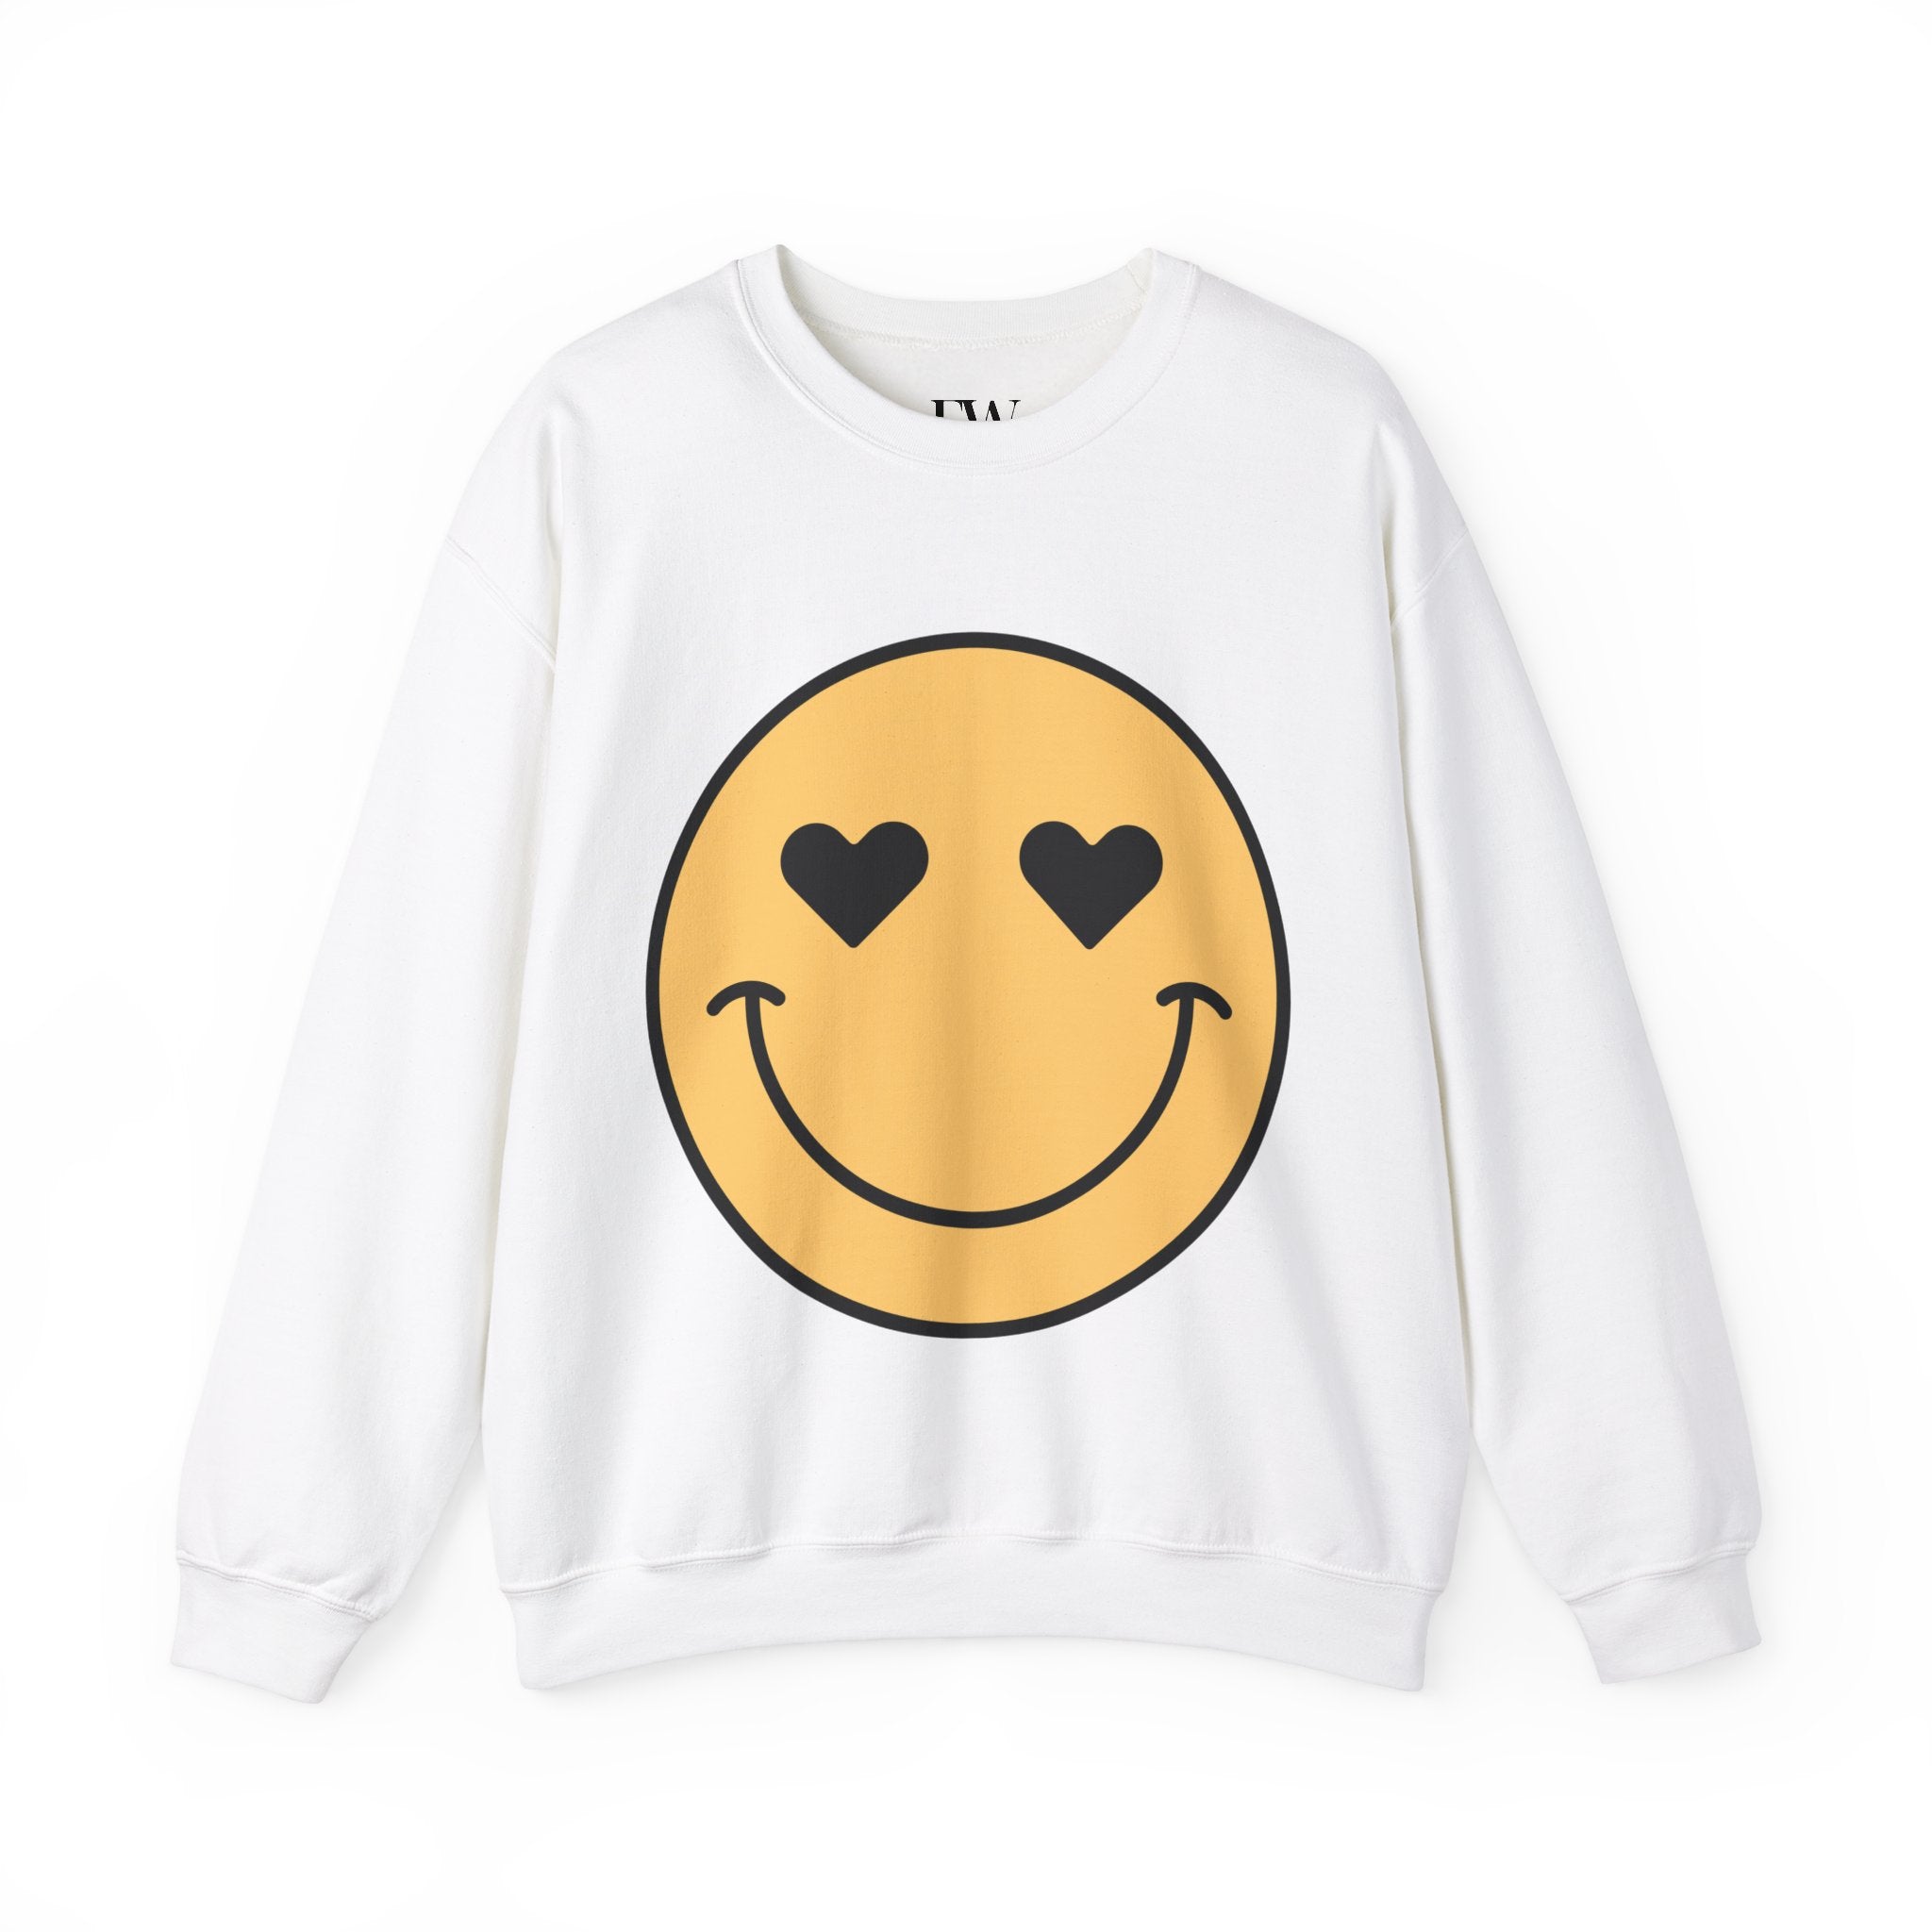 Heart Smiley Face Sweatshirt